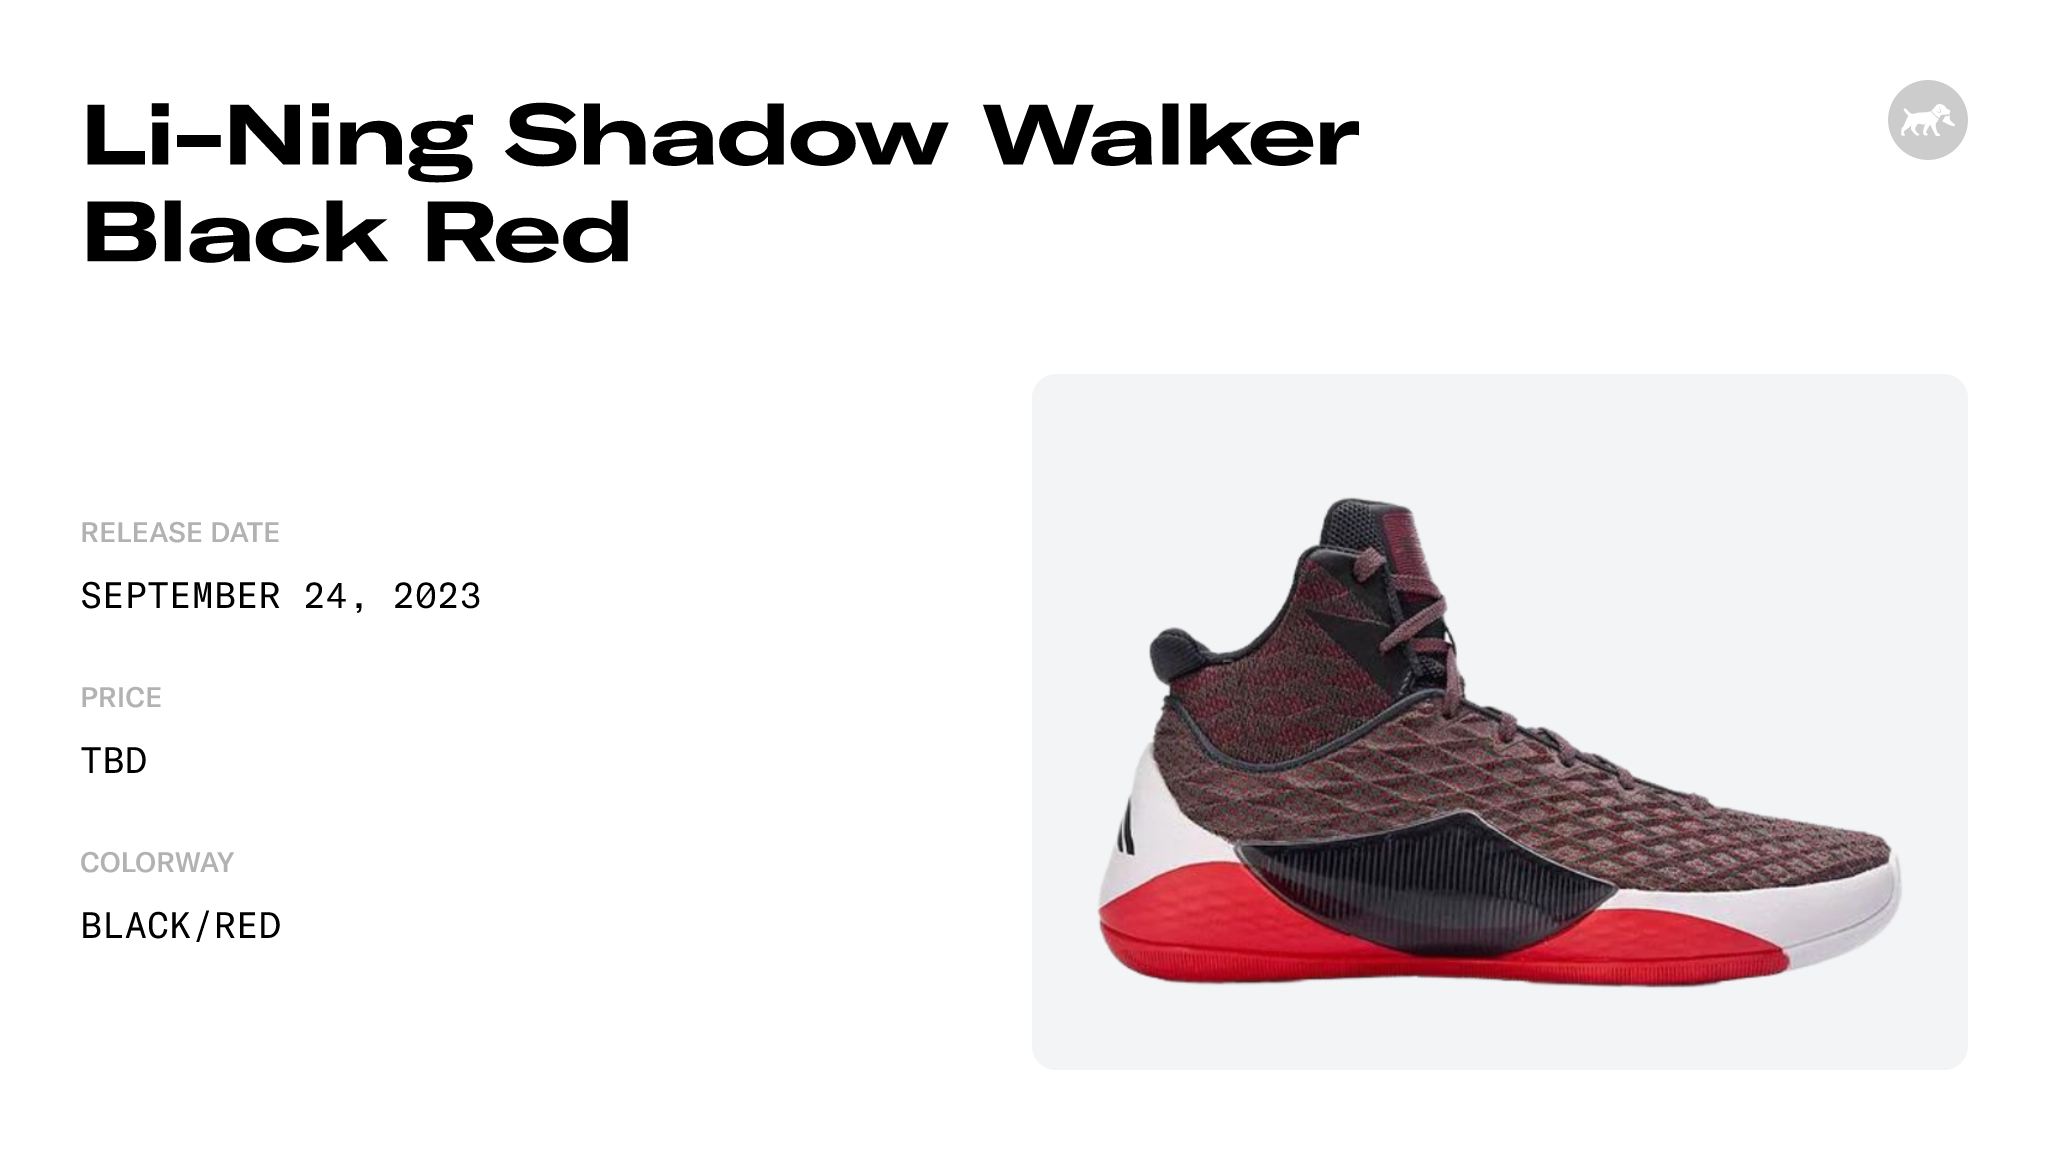 Li-Ning Shadow Walker Black Red - ABAN019-1 Raffles and Release Date